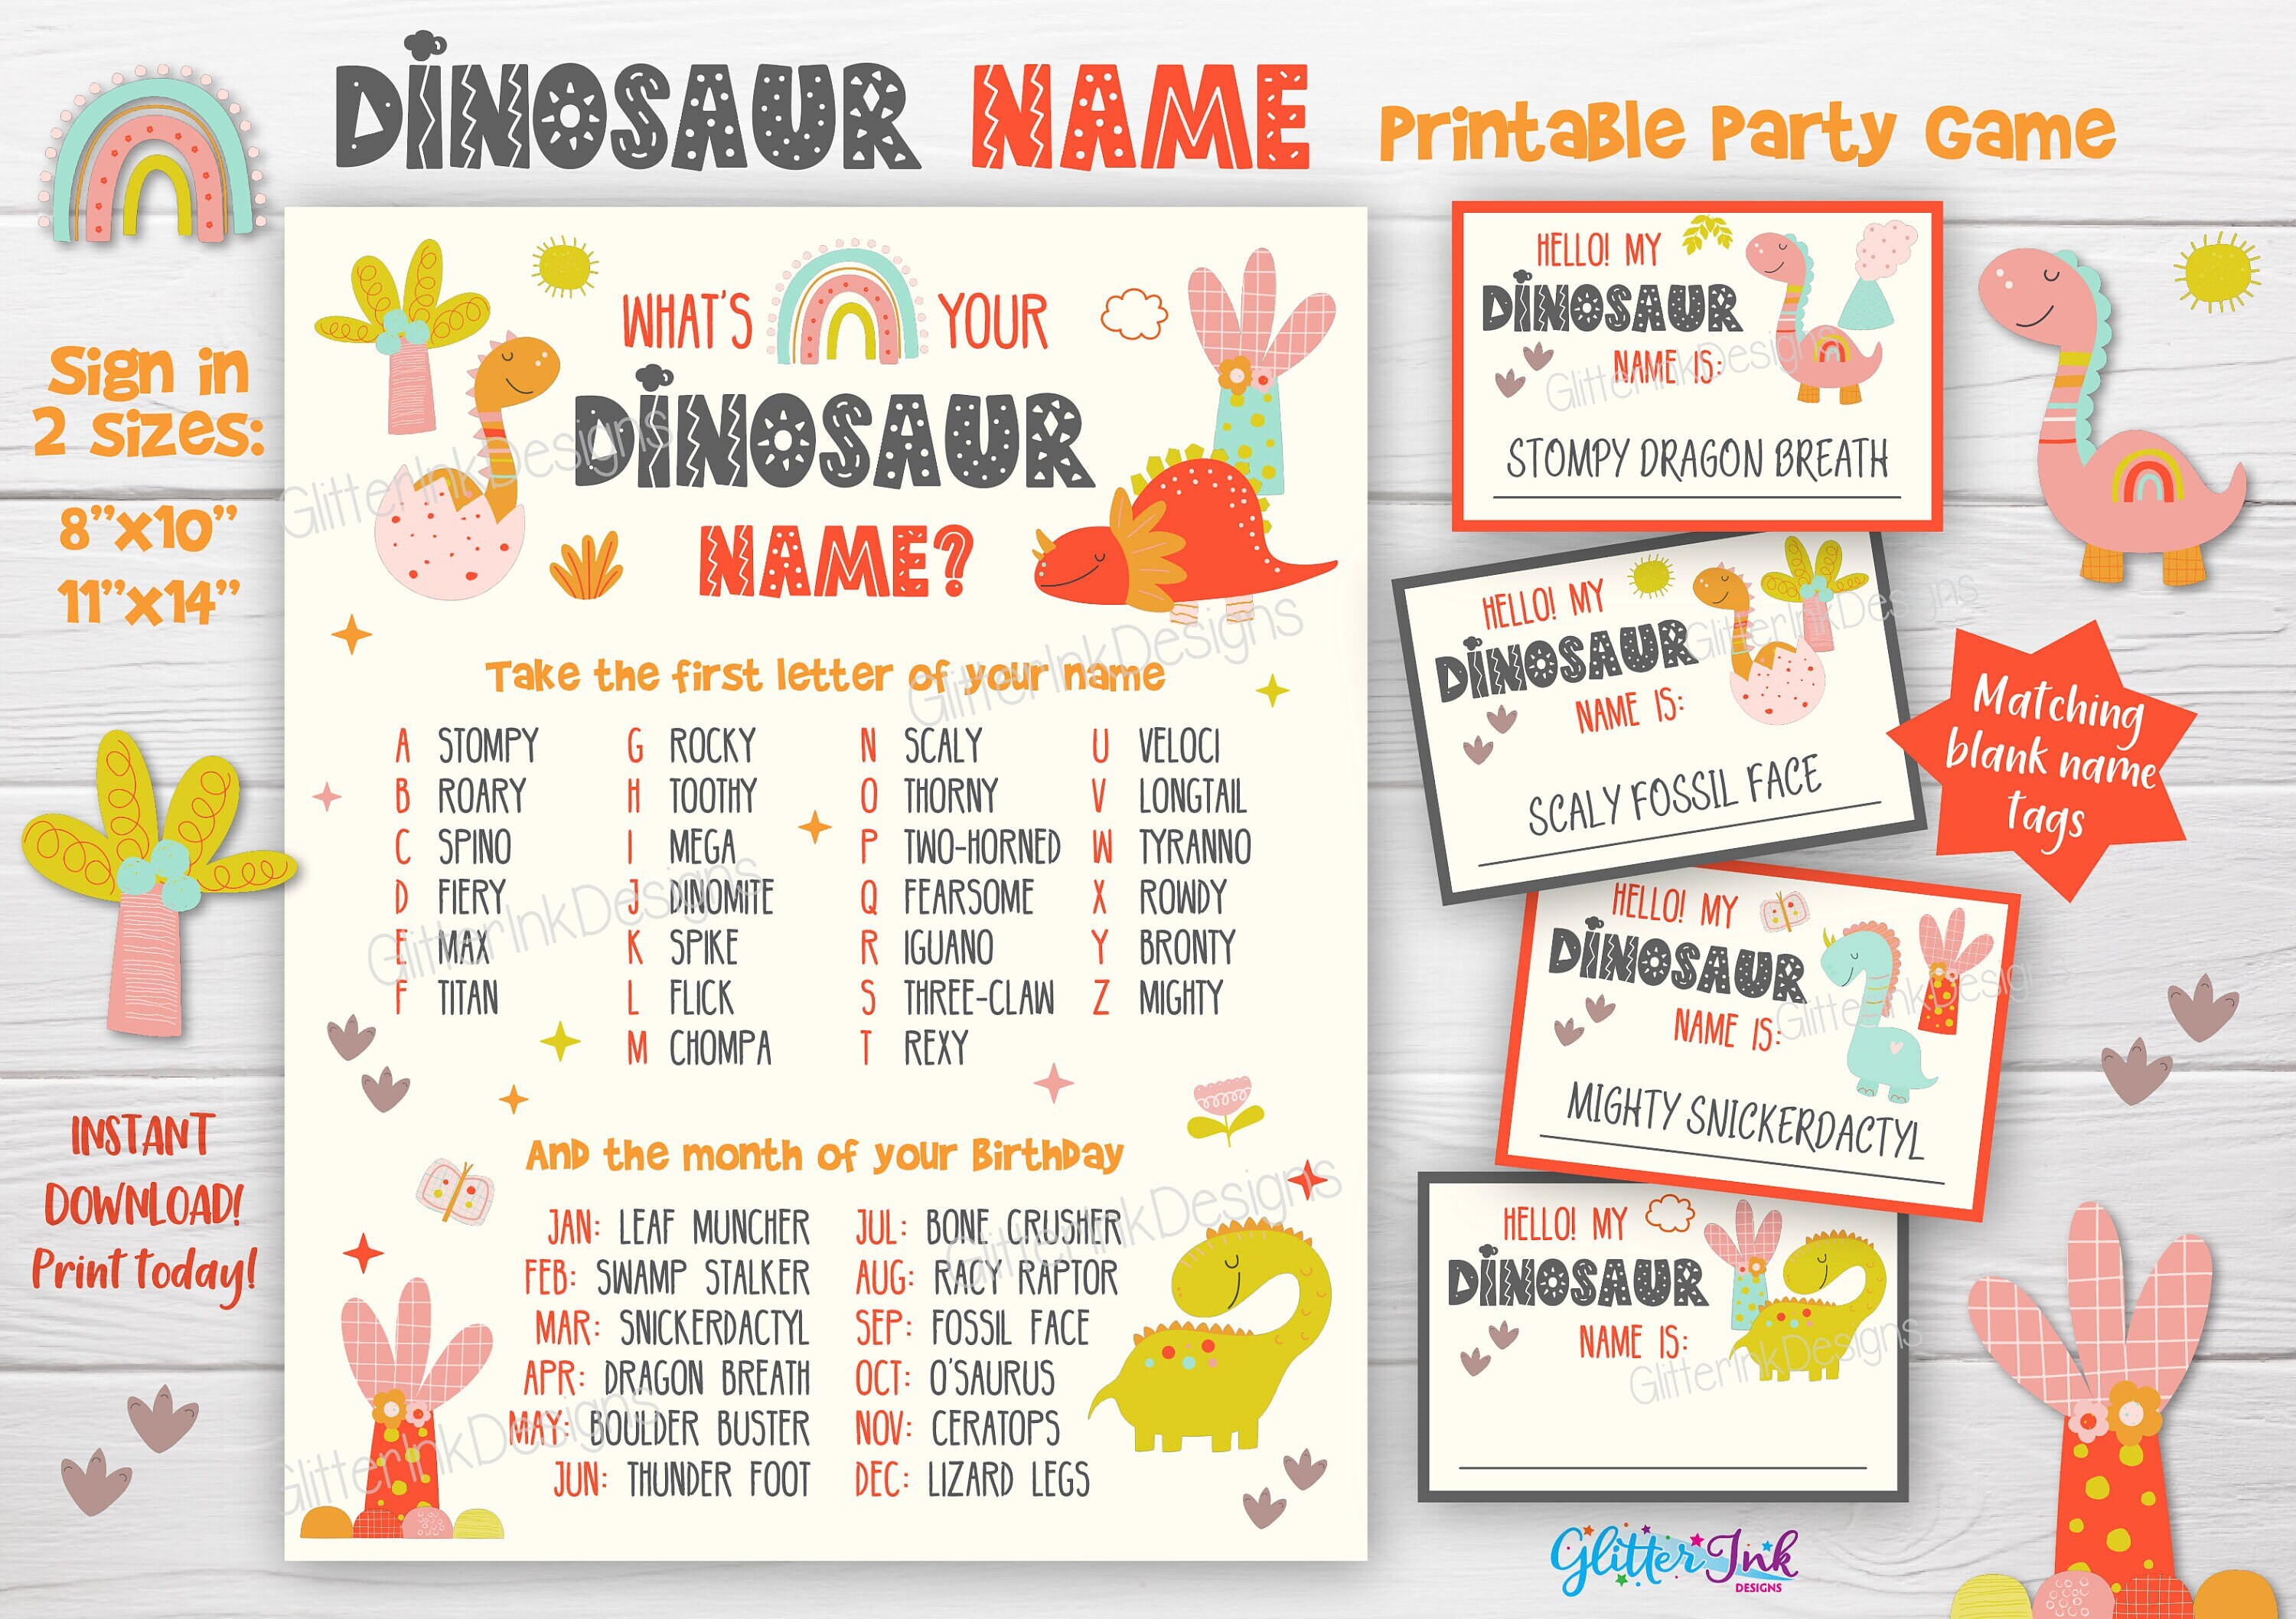 DINOSAUR Birthday Party Game Guess the Dinosaur Trivia Game 